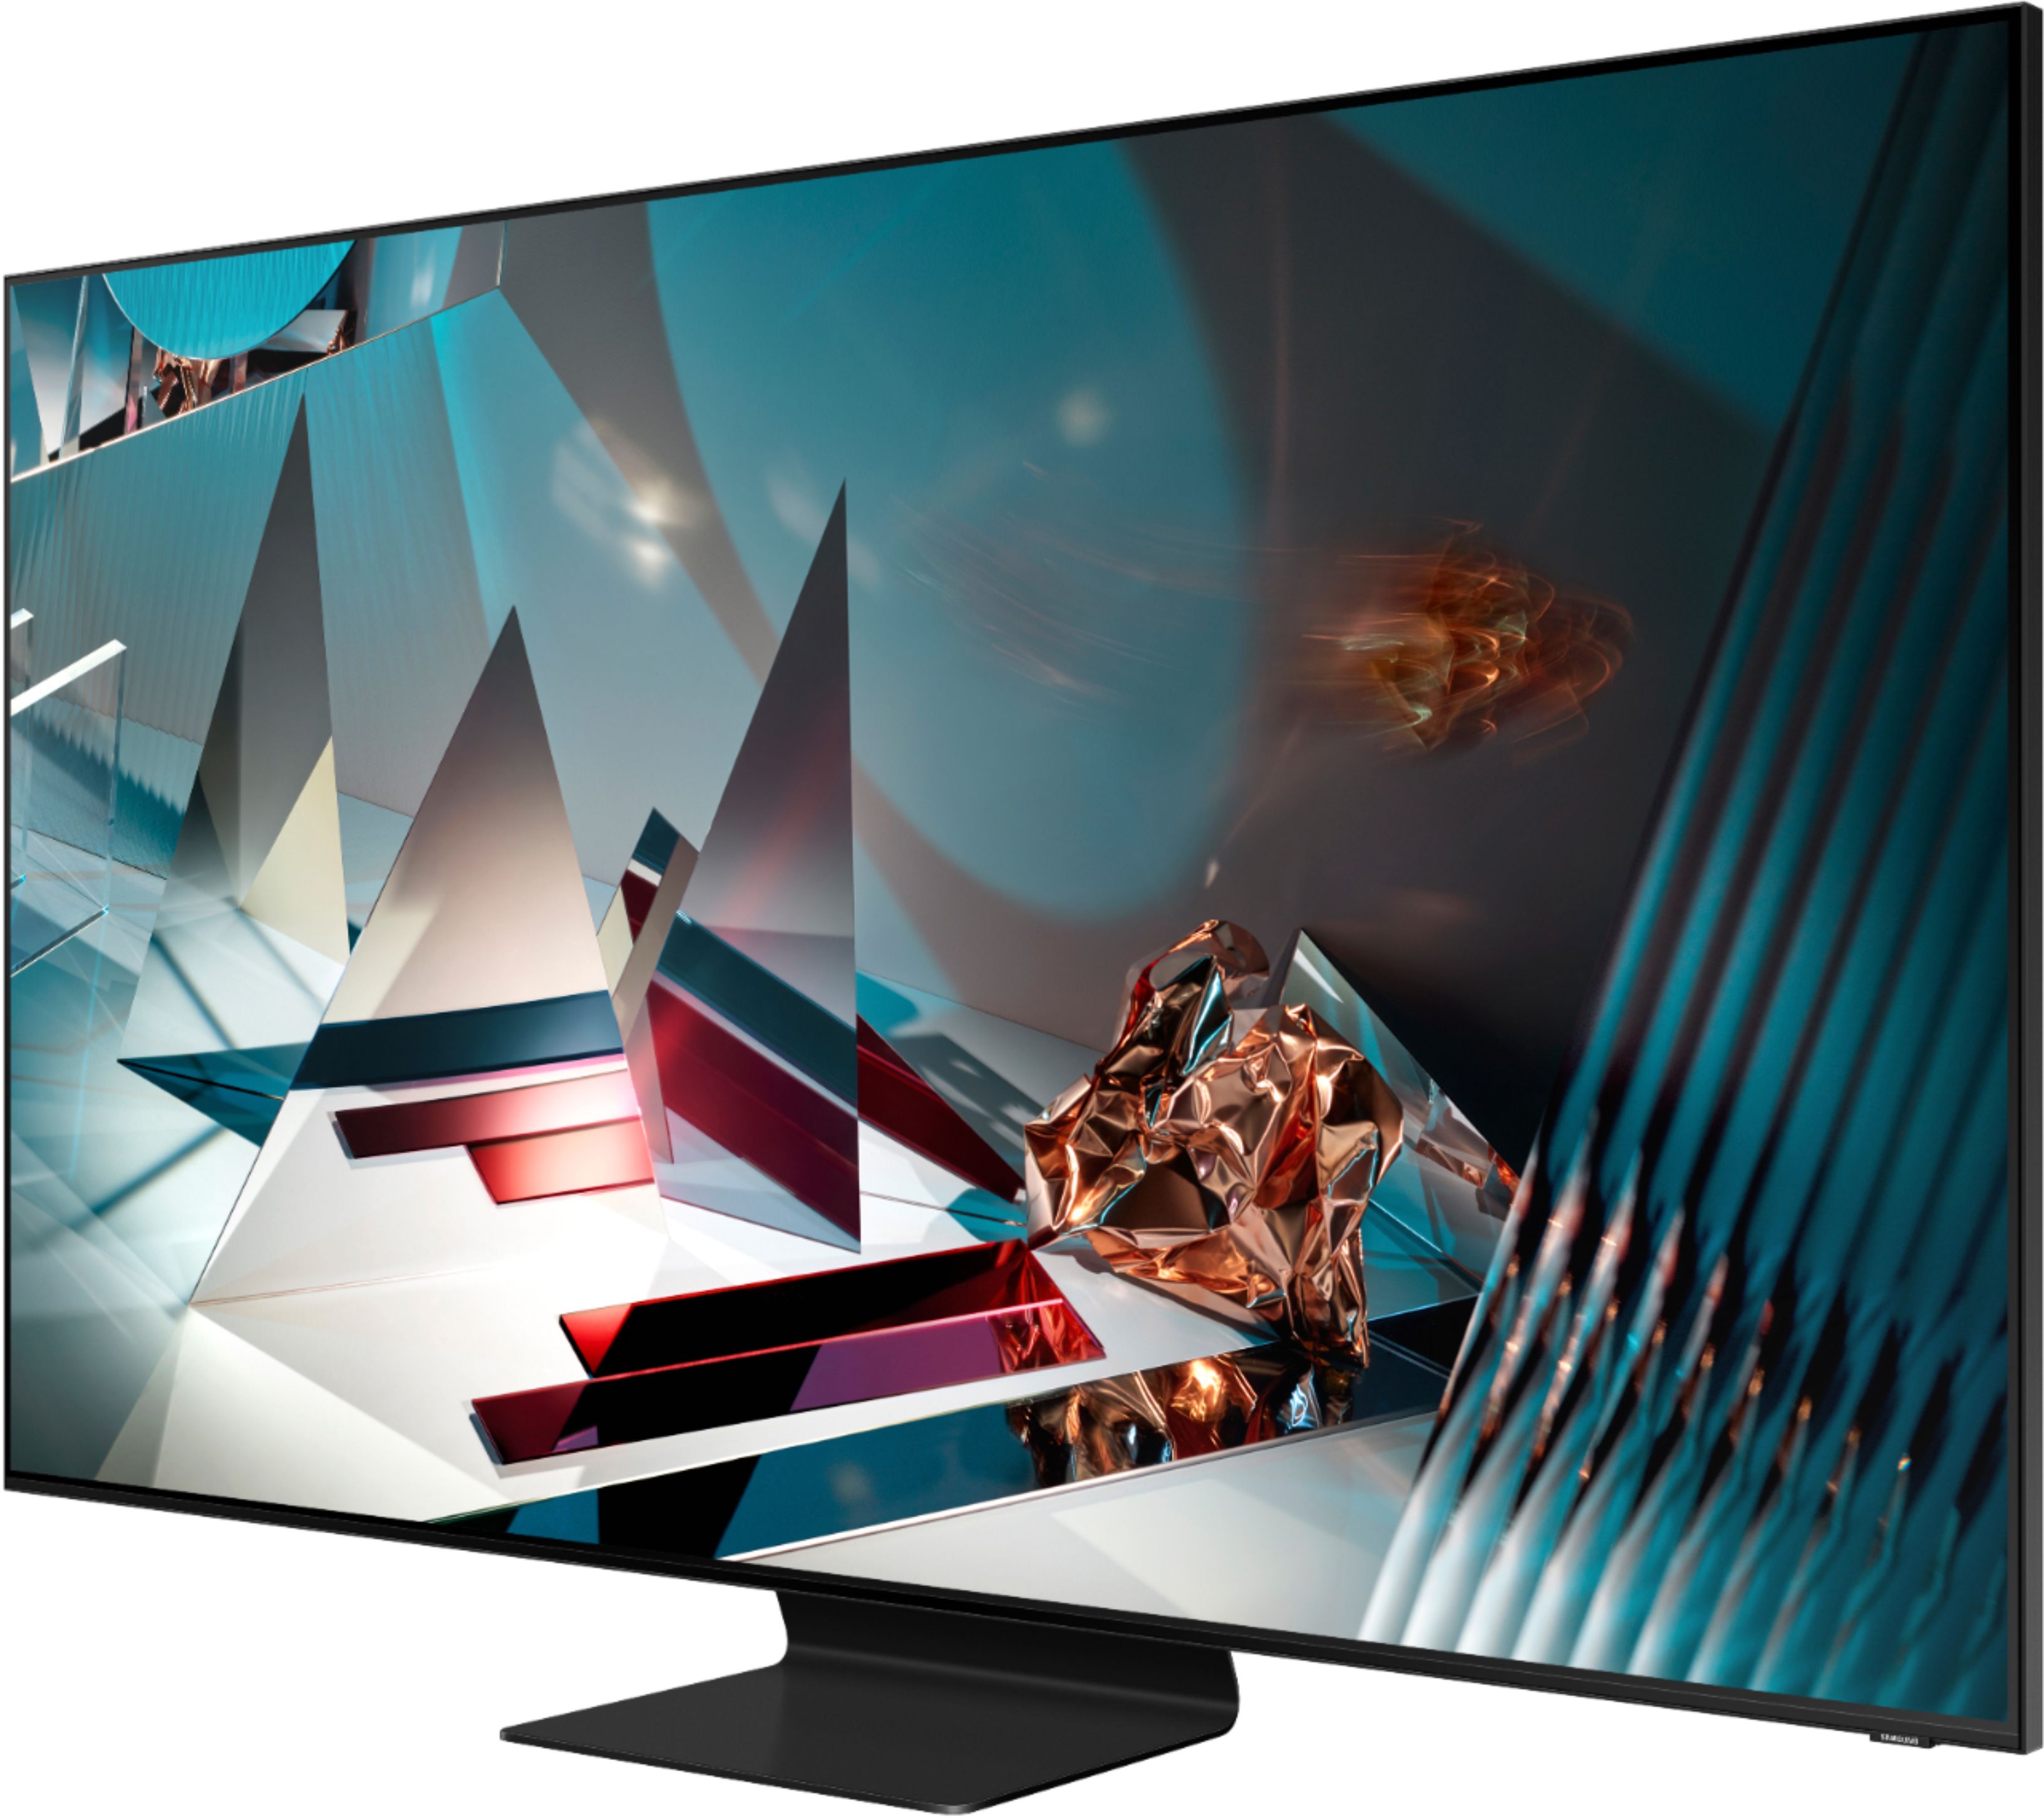 75 pulgadas, HDR10+ y Tizen OS: este televisor Samsung está a precio de  derribo en PcComponentes